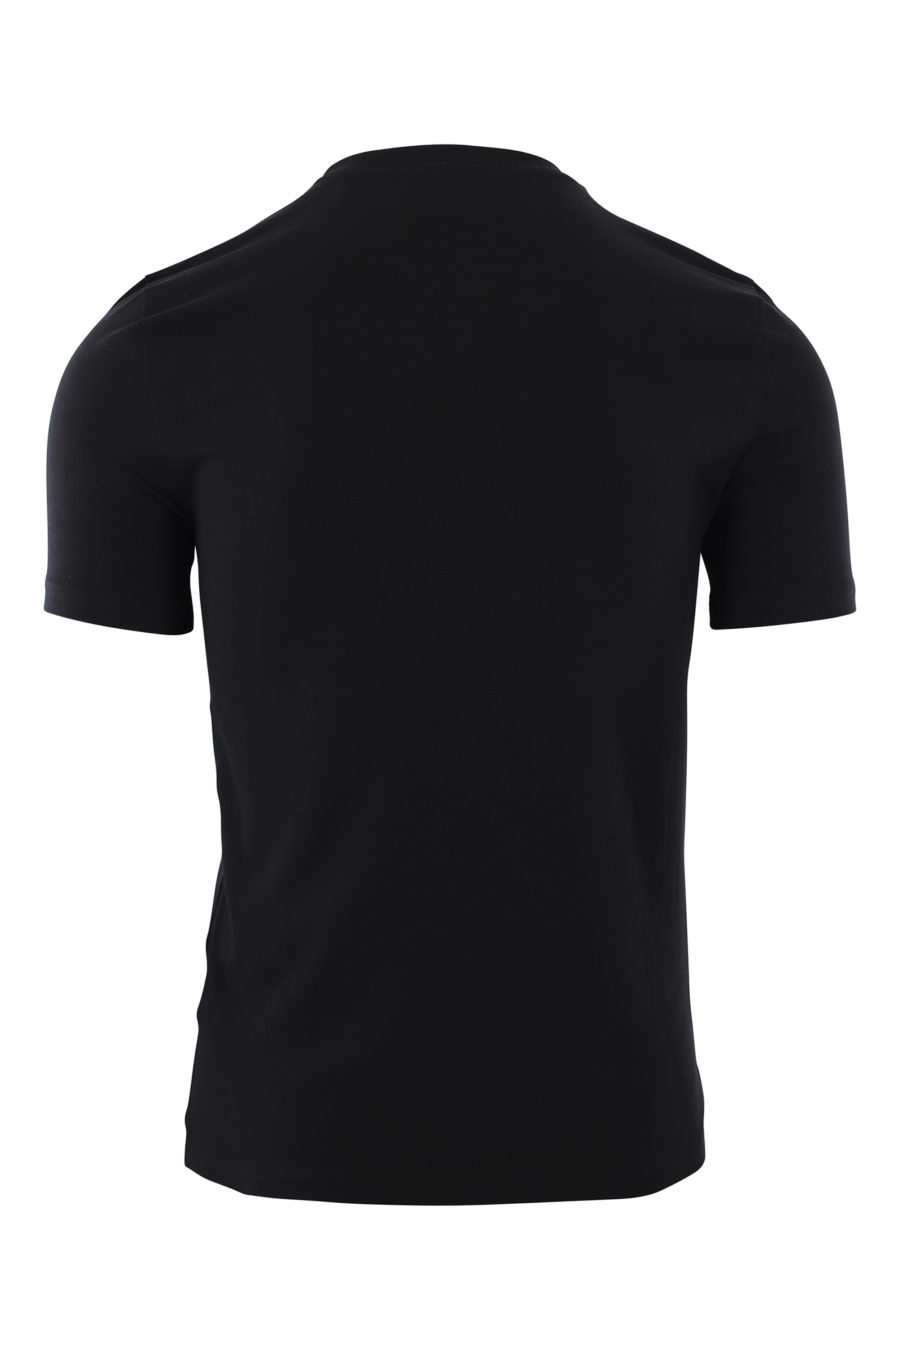 T-shirt noir avec logo "smiley" de Milan - IMG 2426